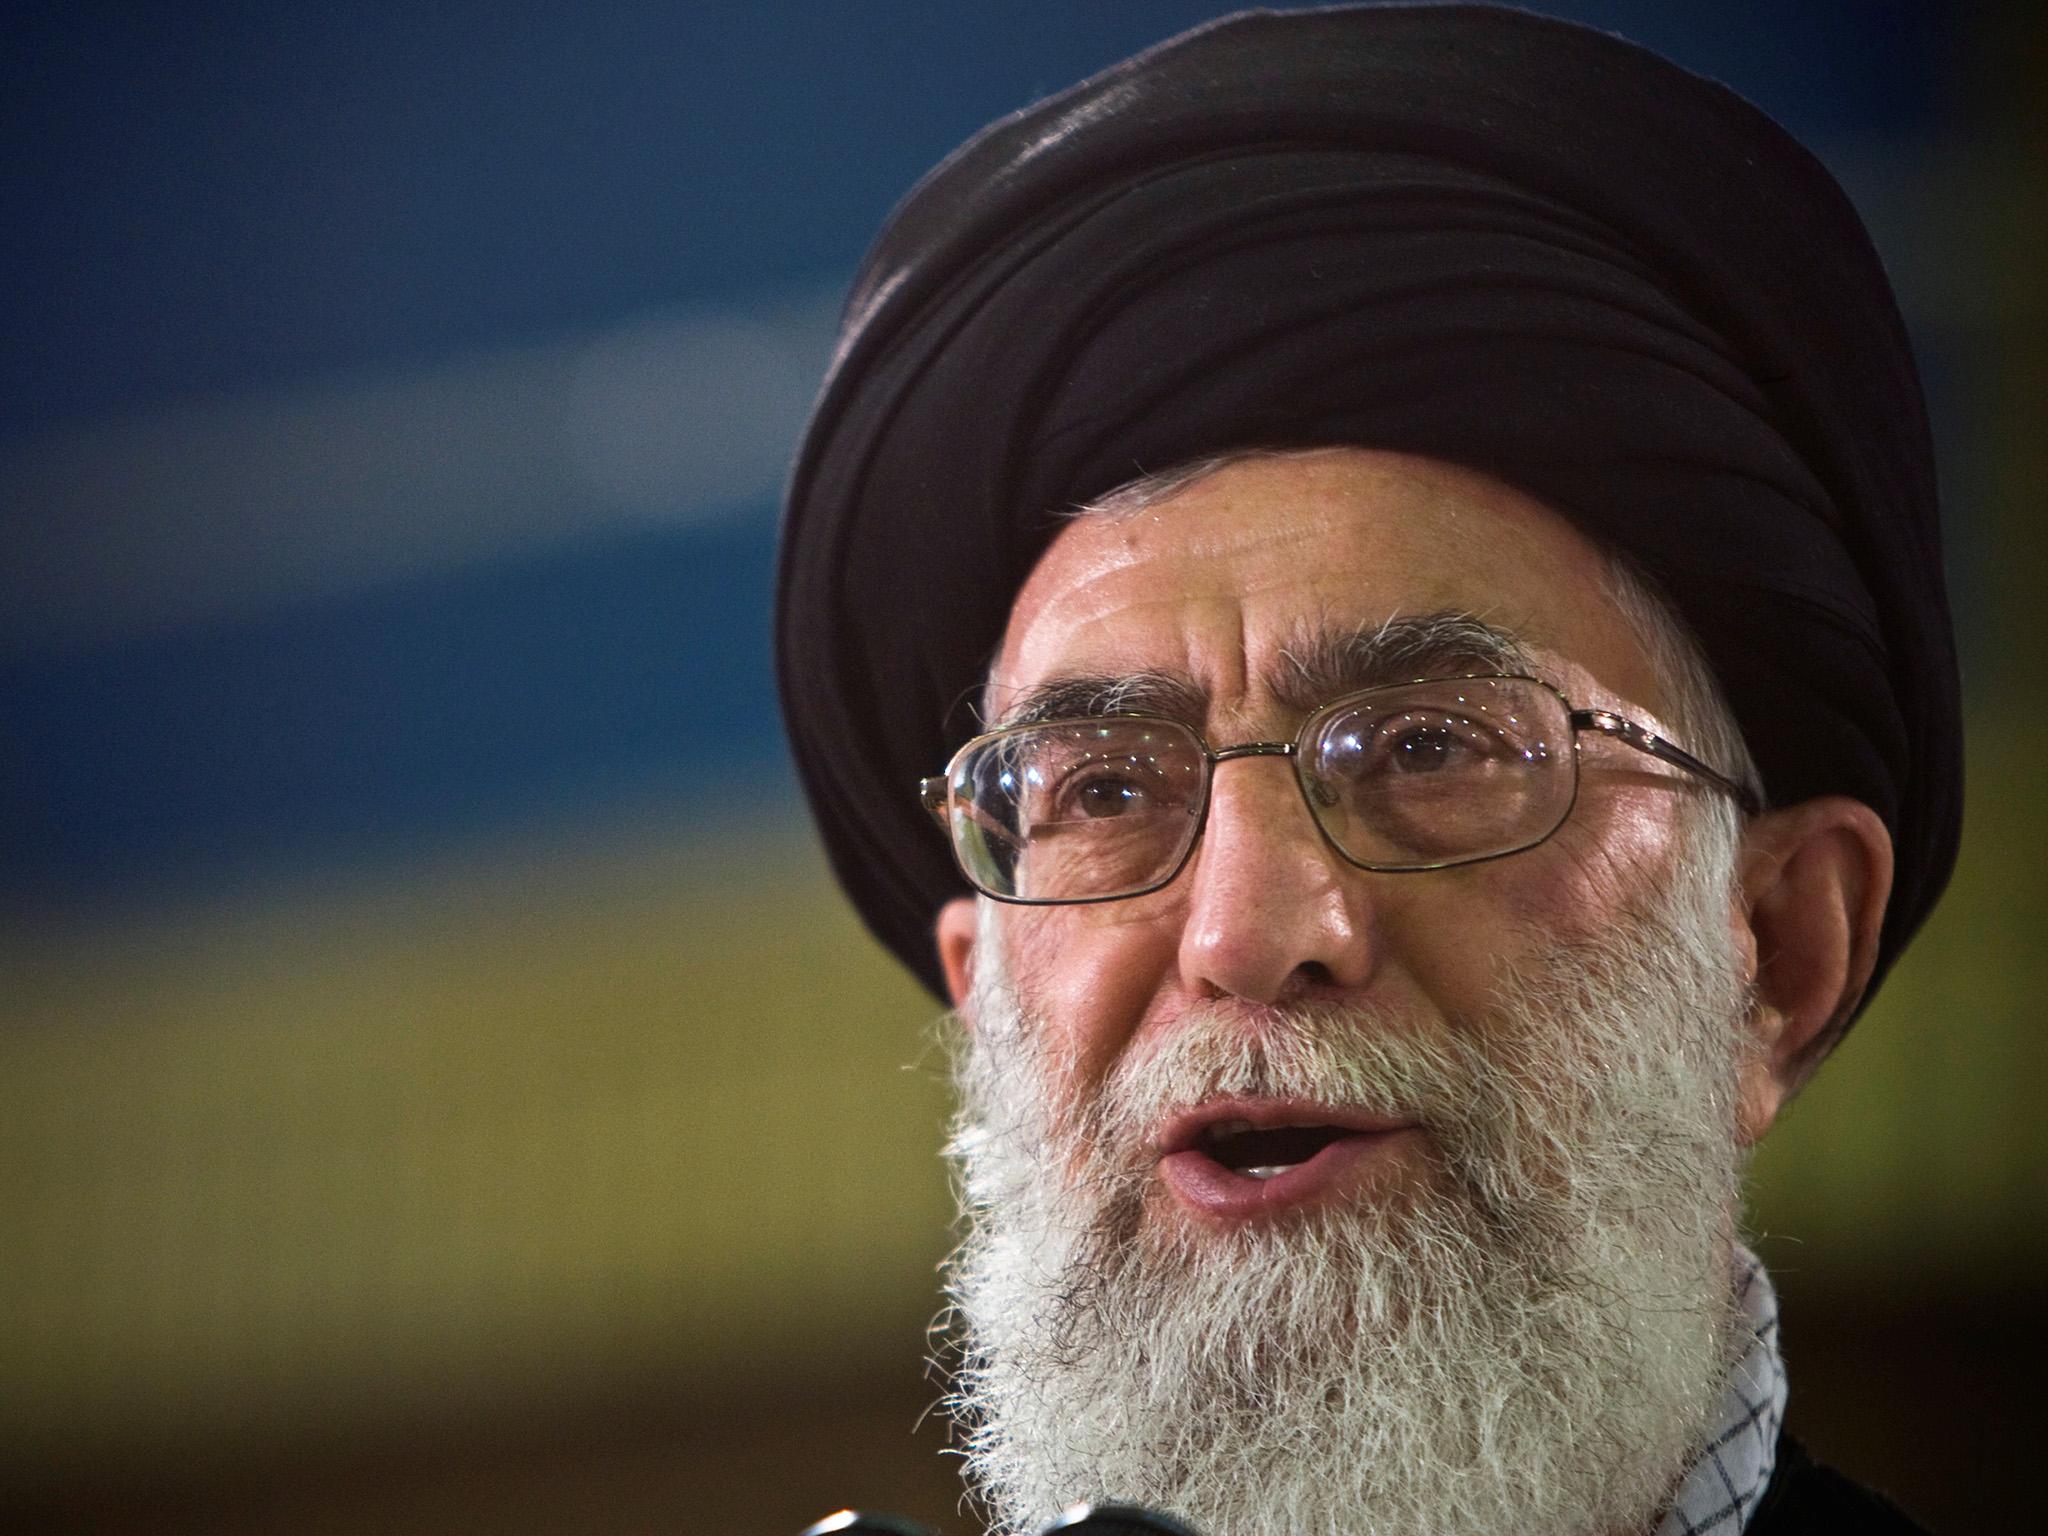 Iran's Supreme Leader, Ayatollah Ali Khamenei, has made a series of threats against Israel